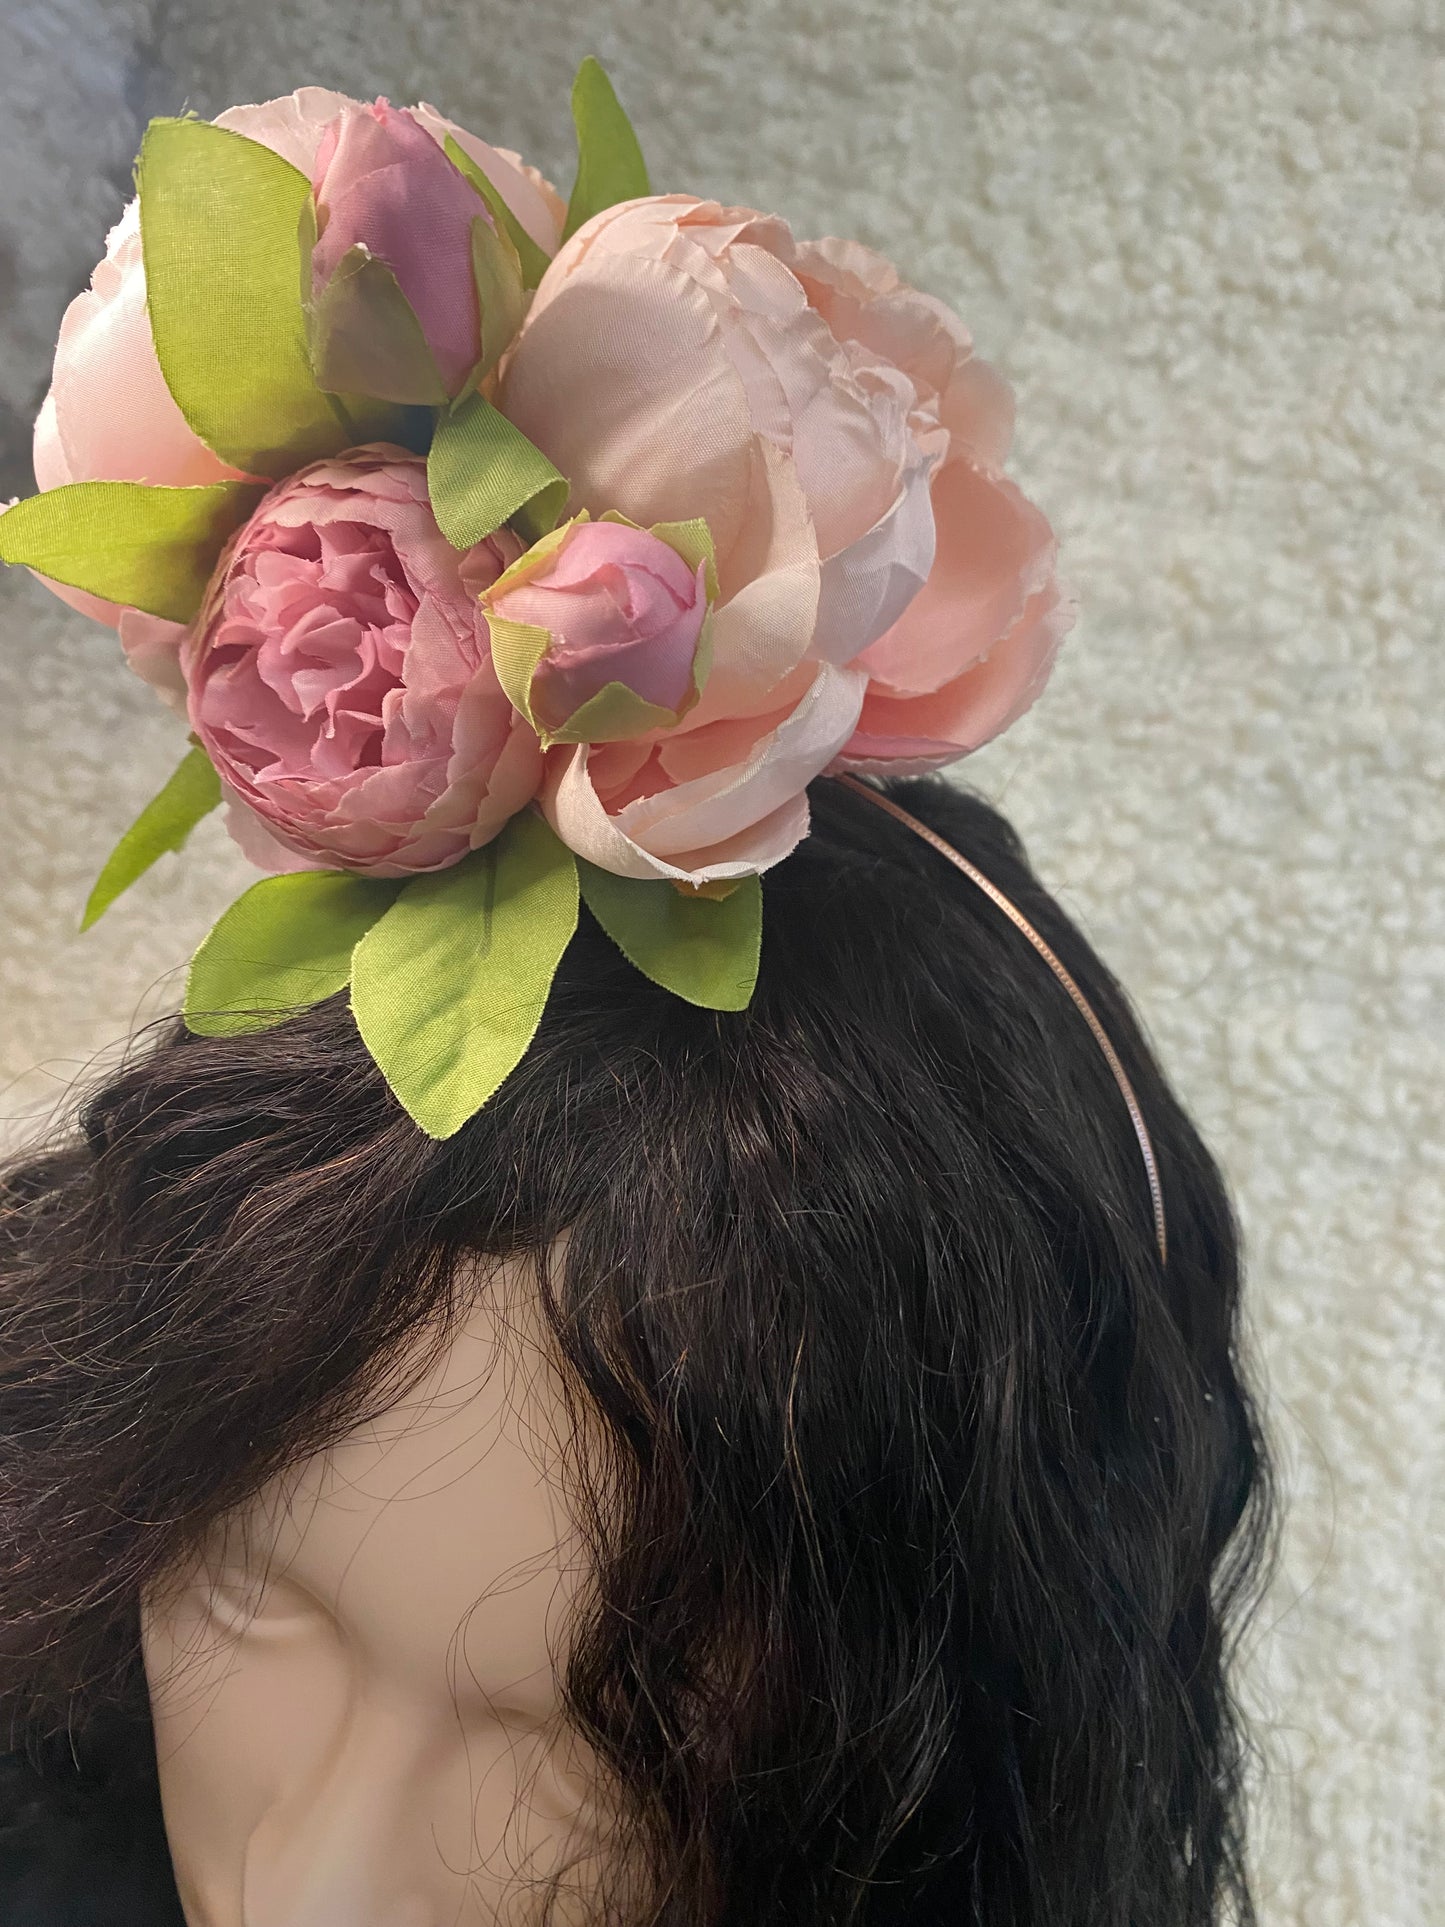 Rose Day Headband